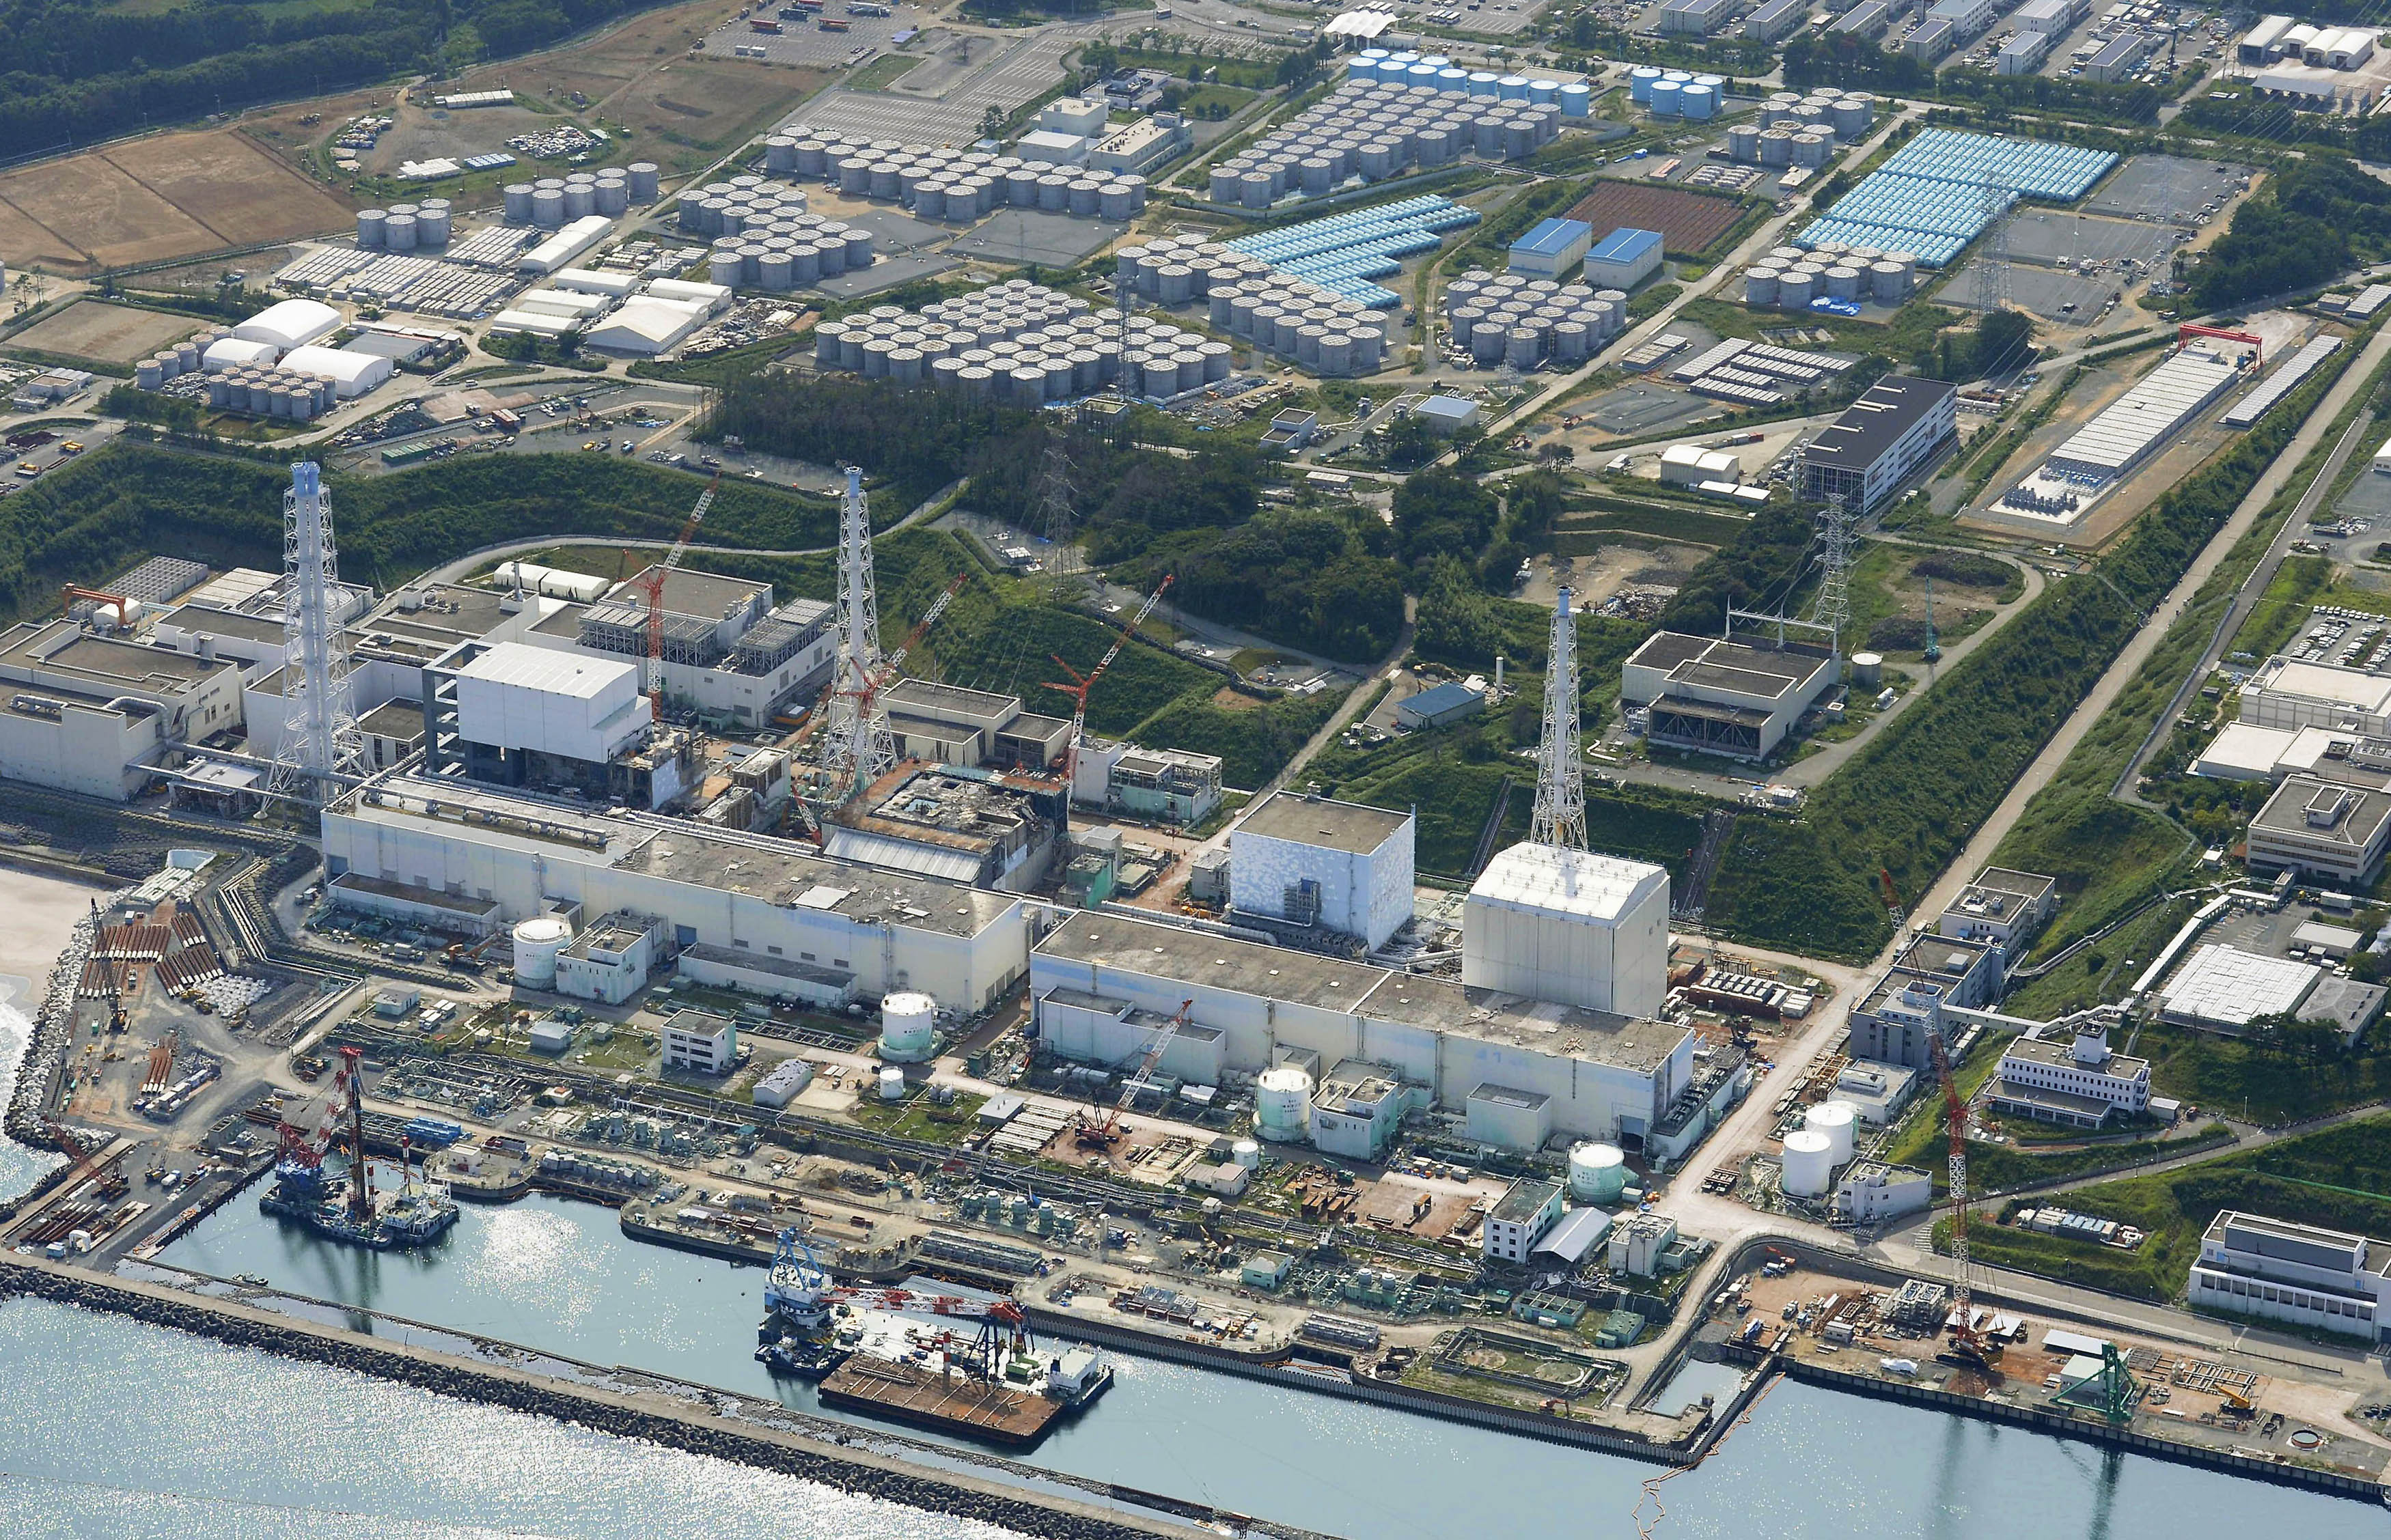 fukushima nuclear reactor meltdown pics